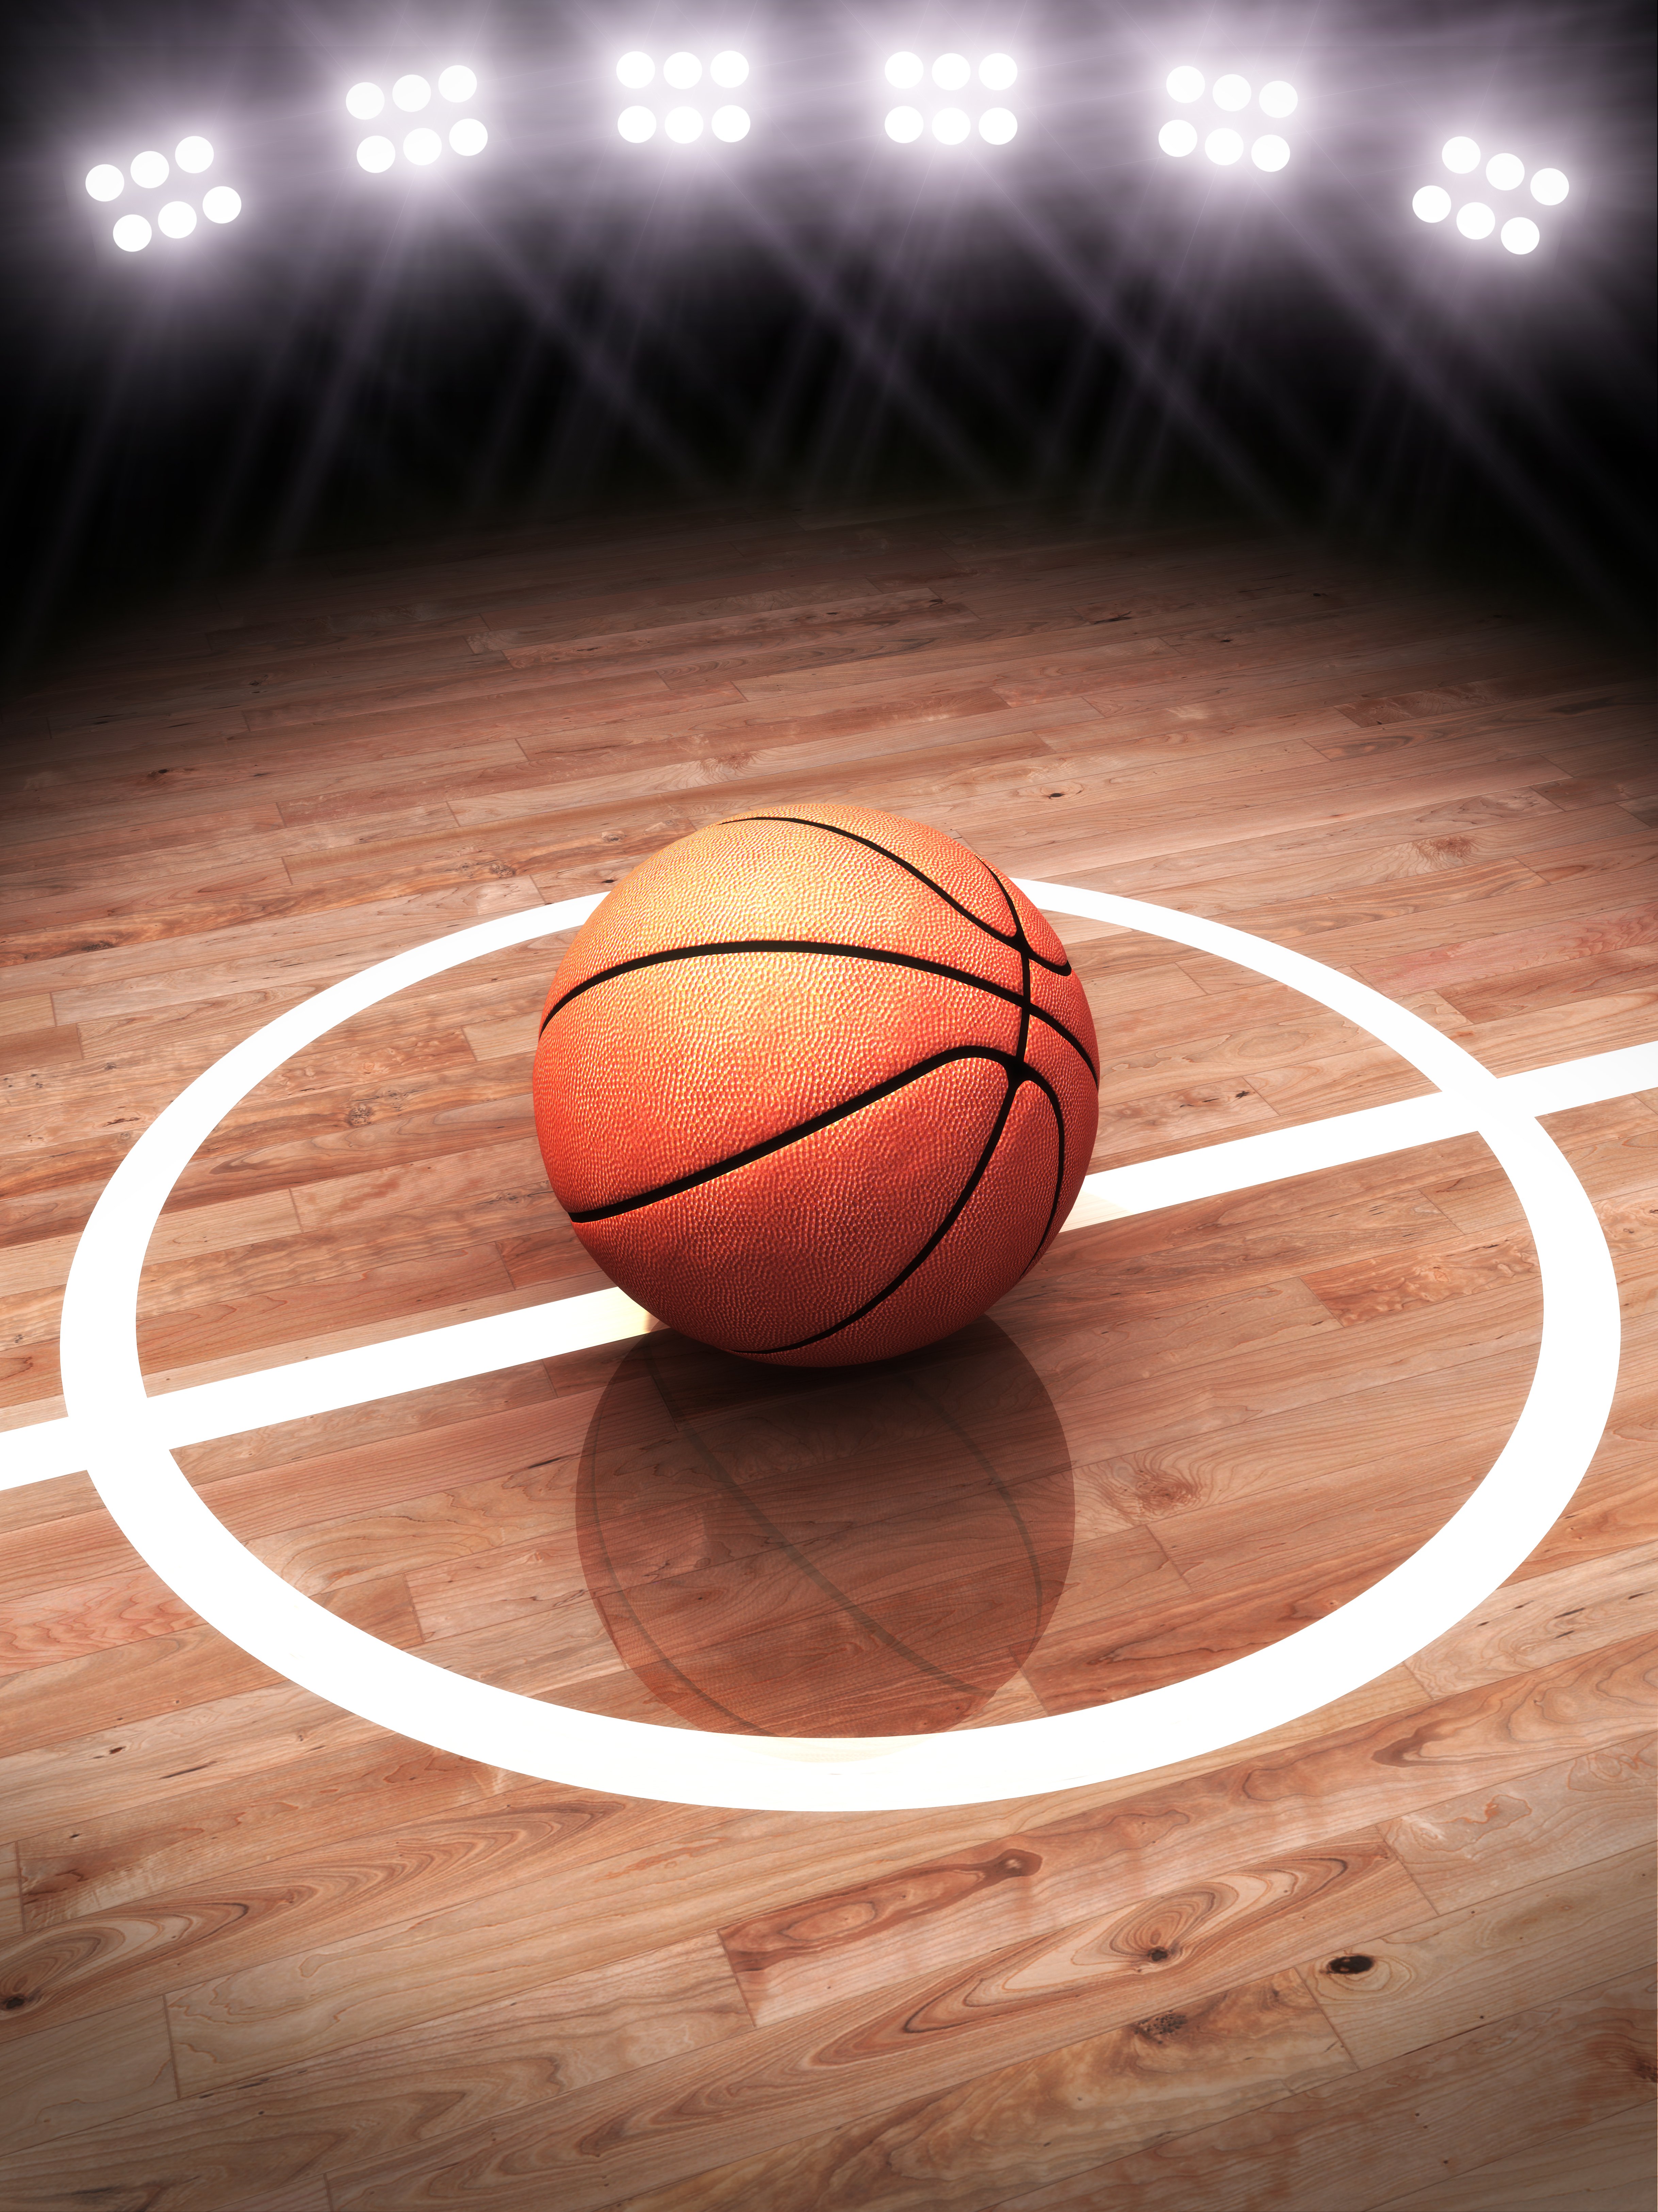 3d-rendering-of-a-basketball-2021-08-26-18-50-01-utc